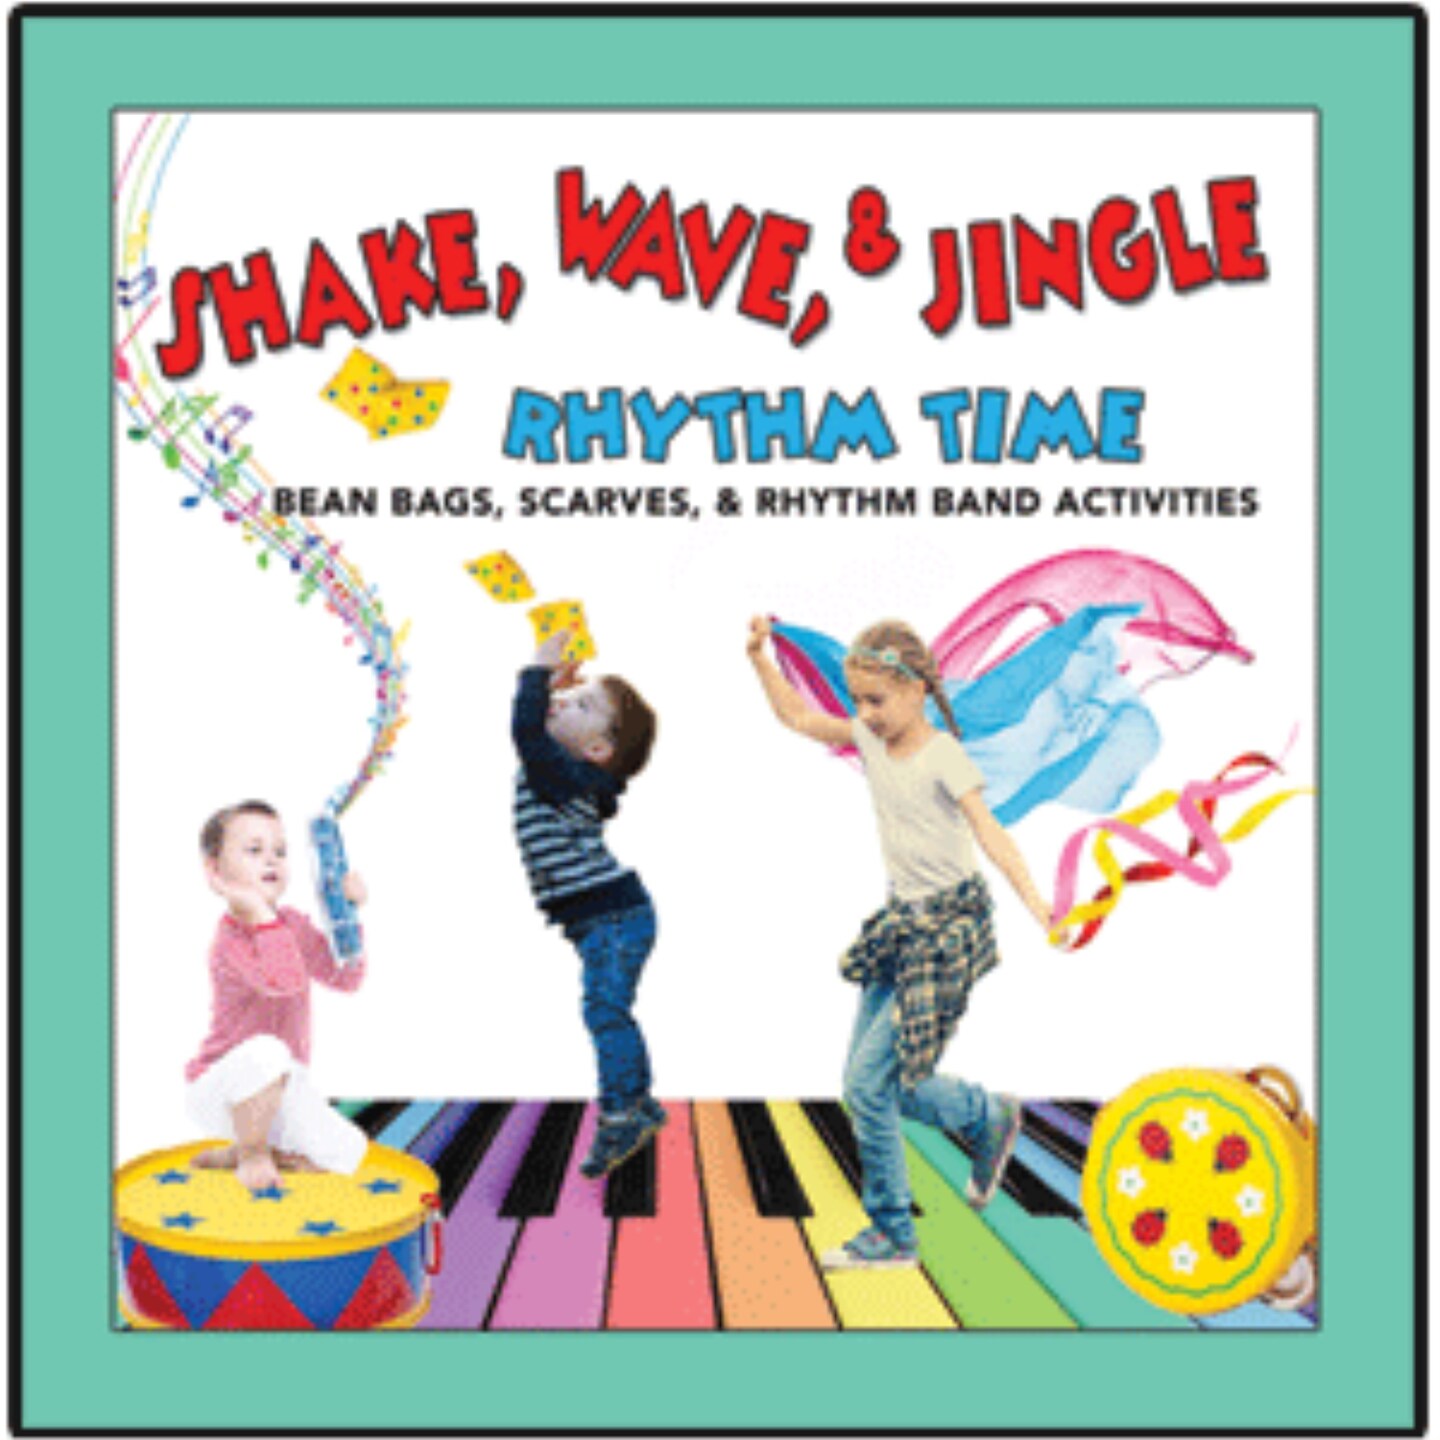 Shake, Wave, Jingle Rhythm Time Educational CD